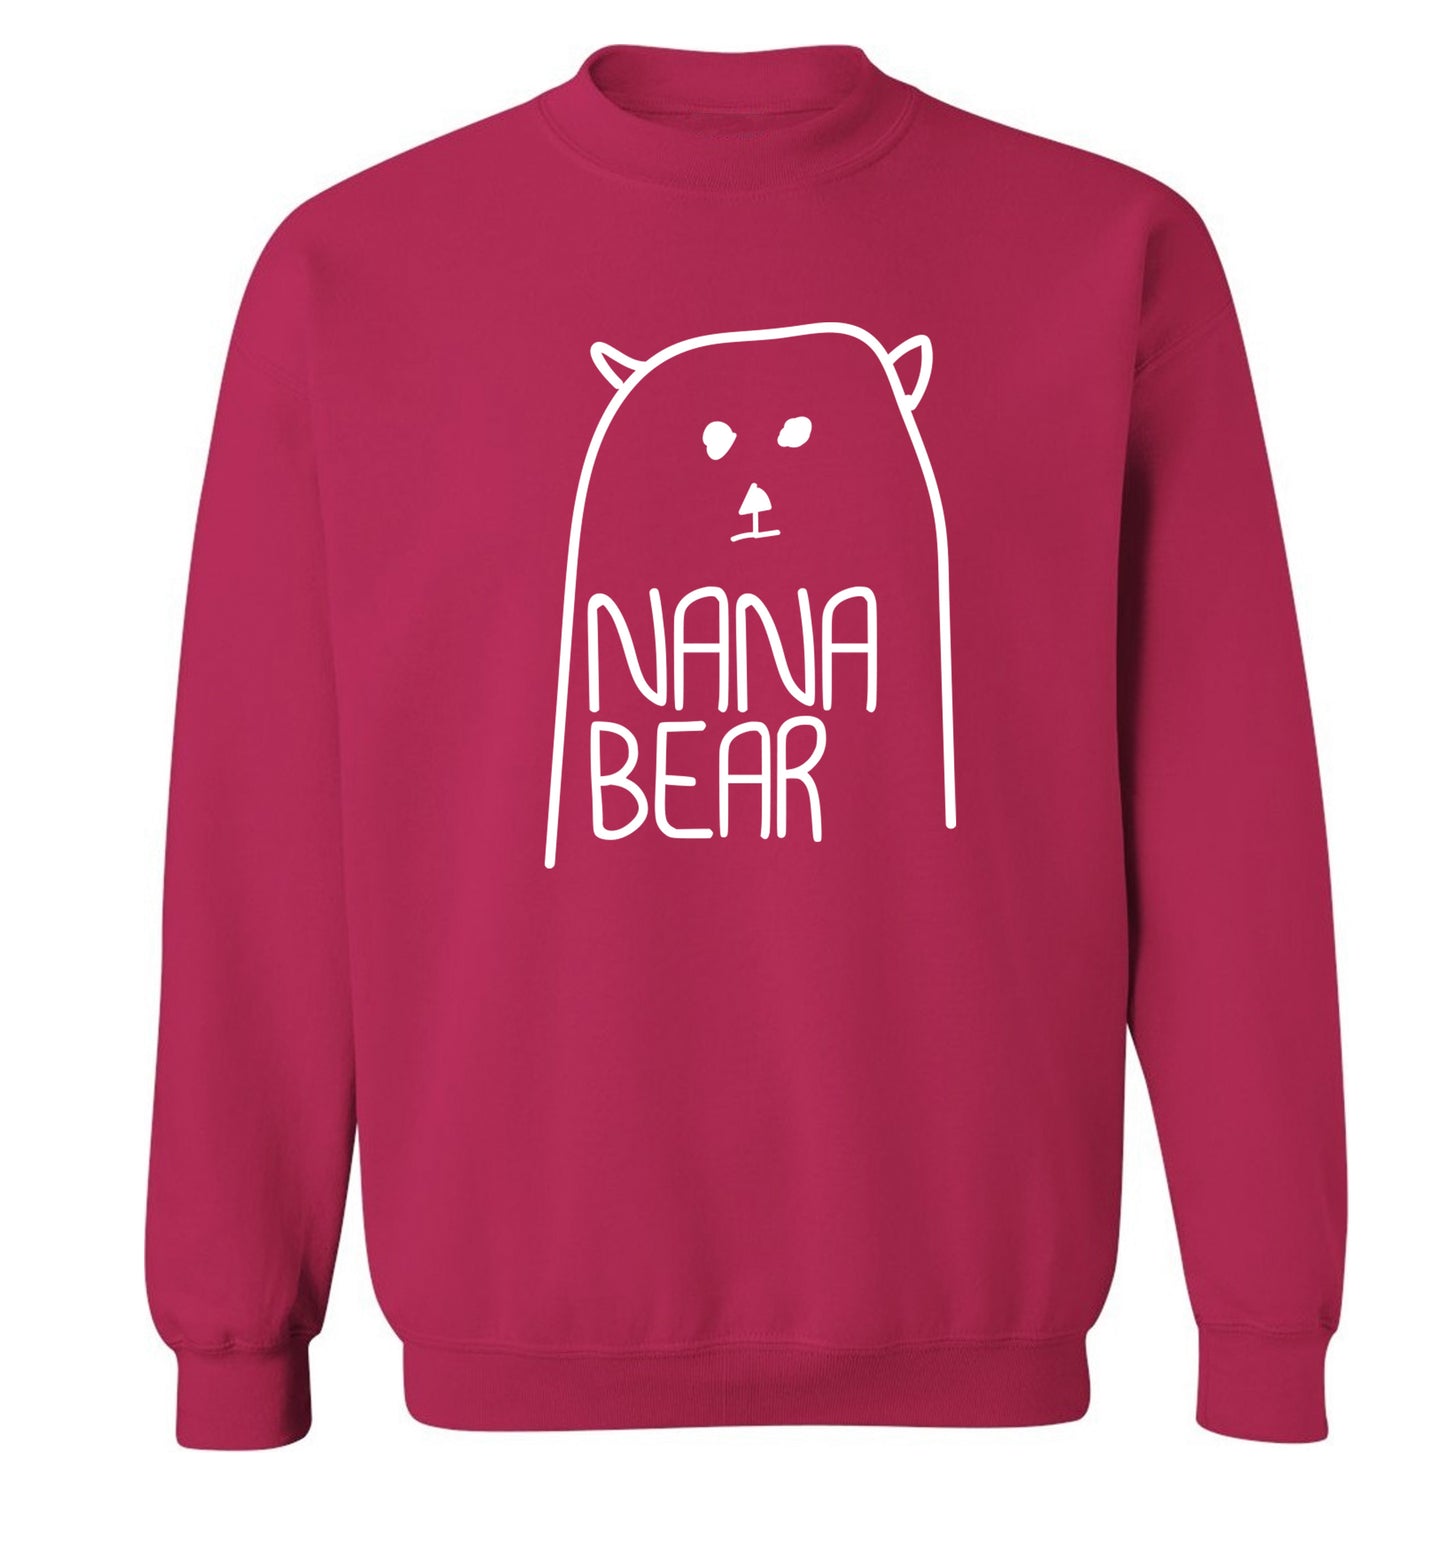 Nana bear Adult's unisex pink Sweater 2XL